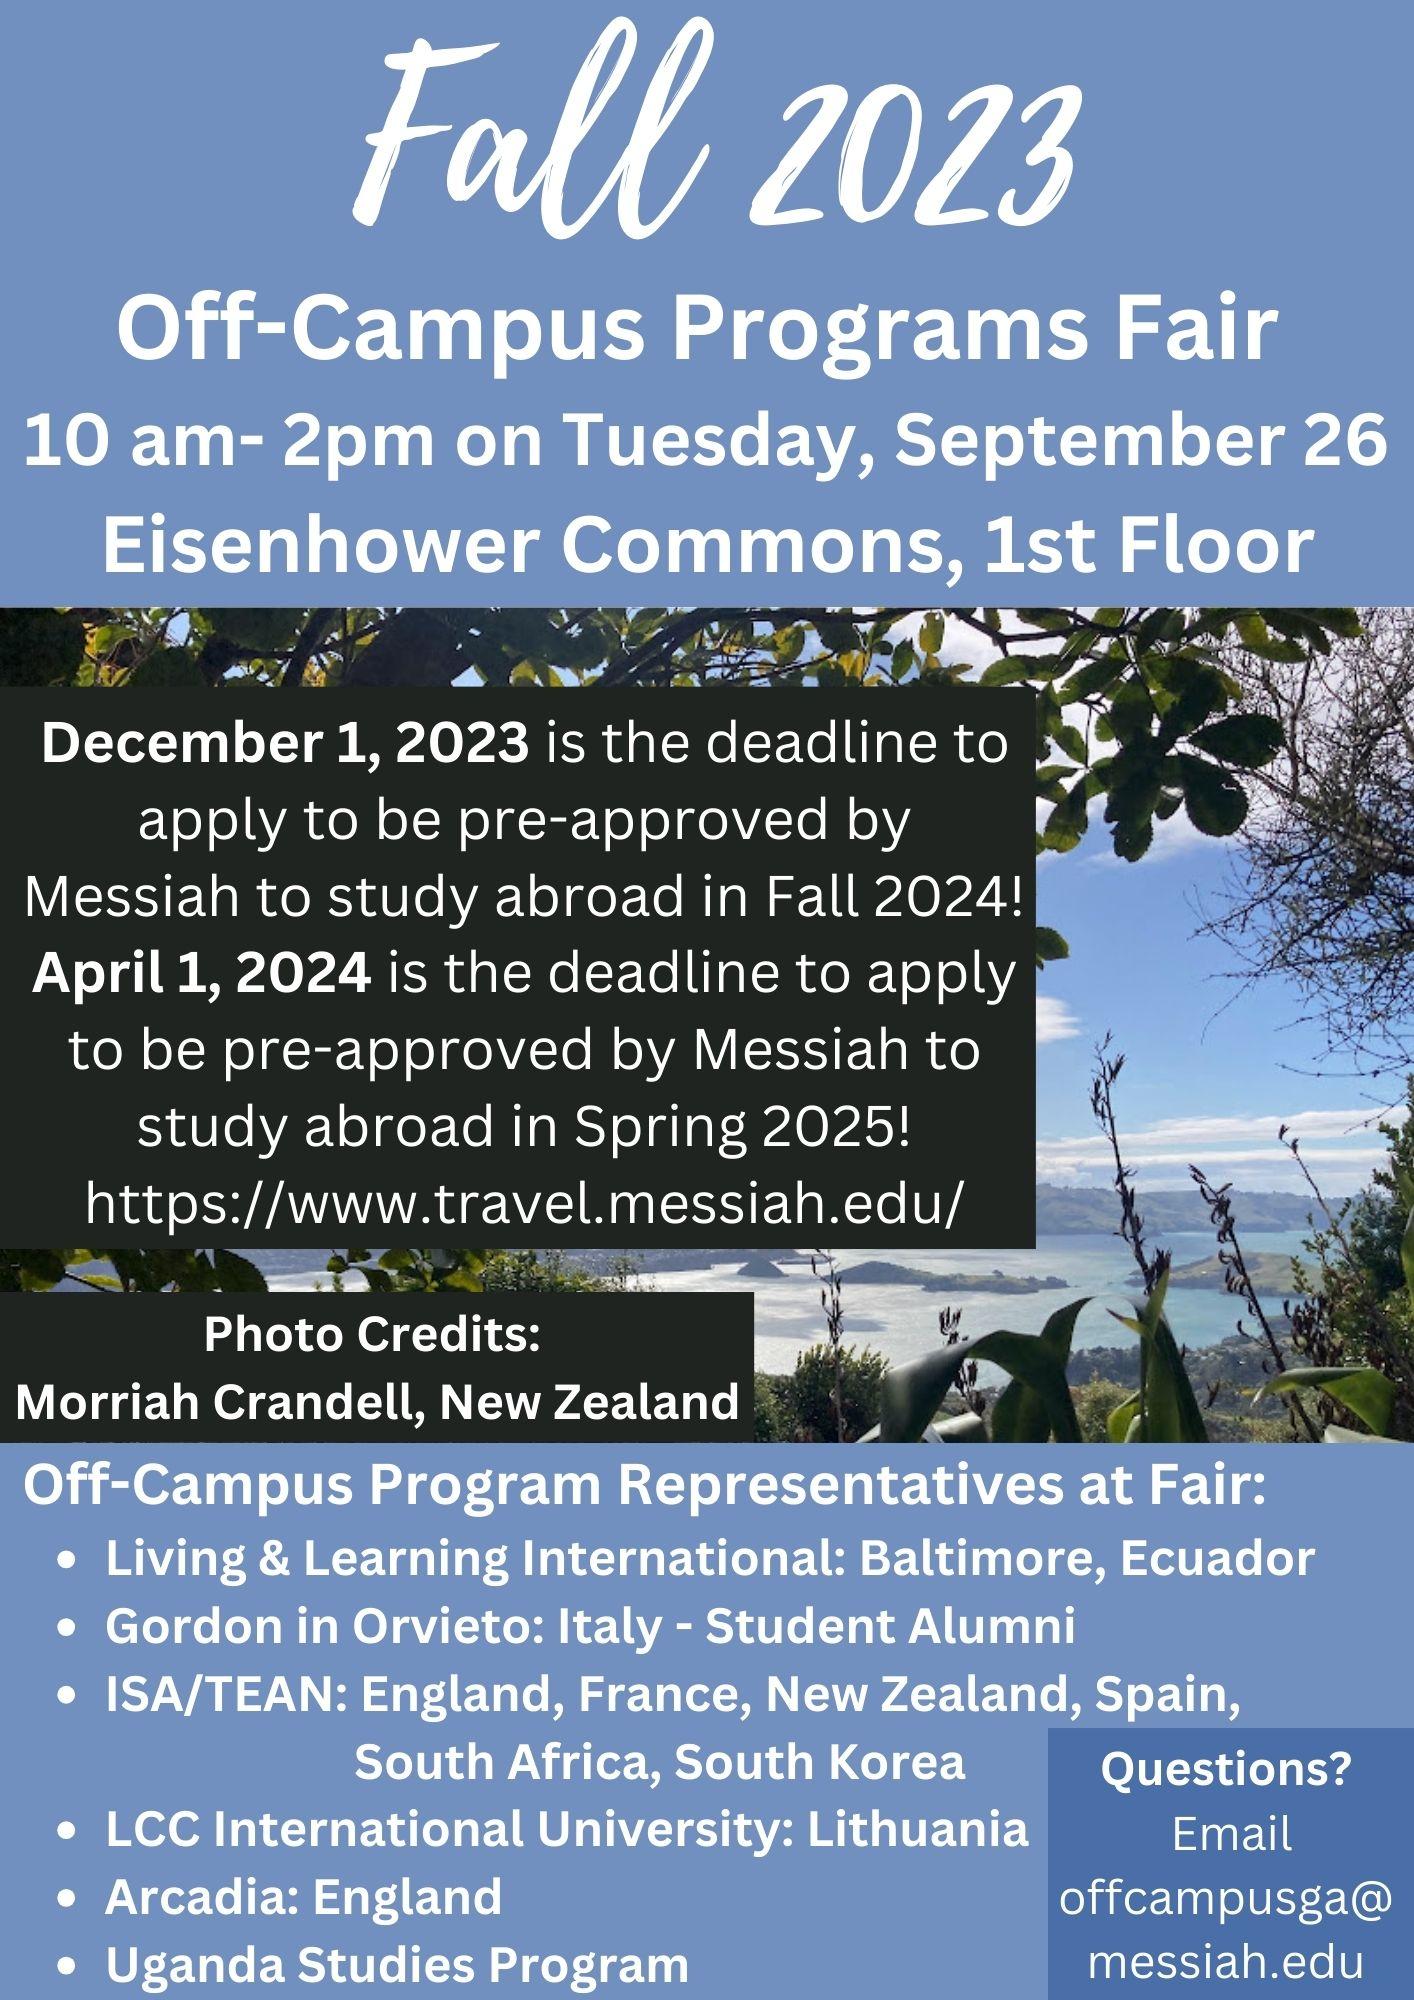 Fall 2023 offcampus programs fair